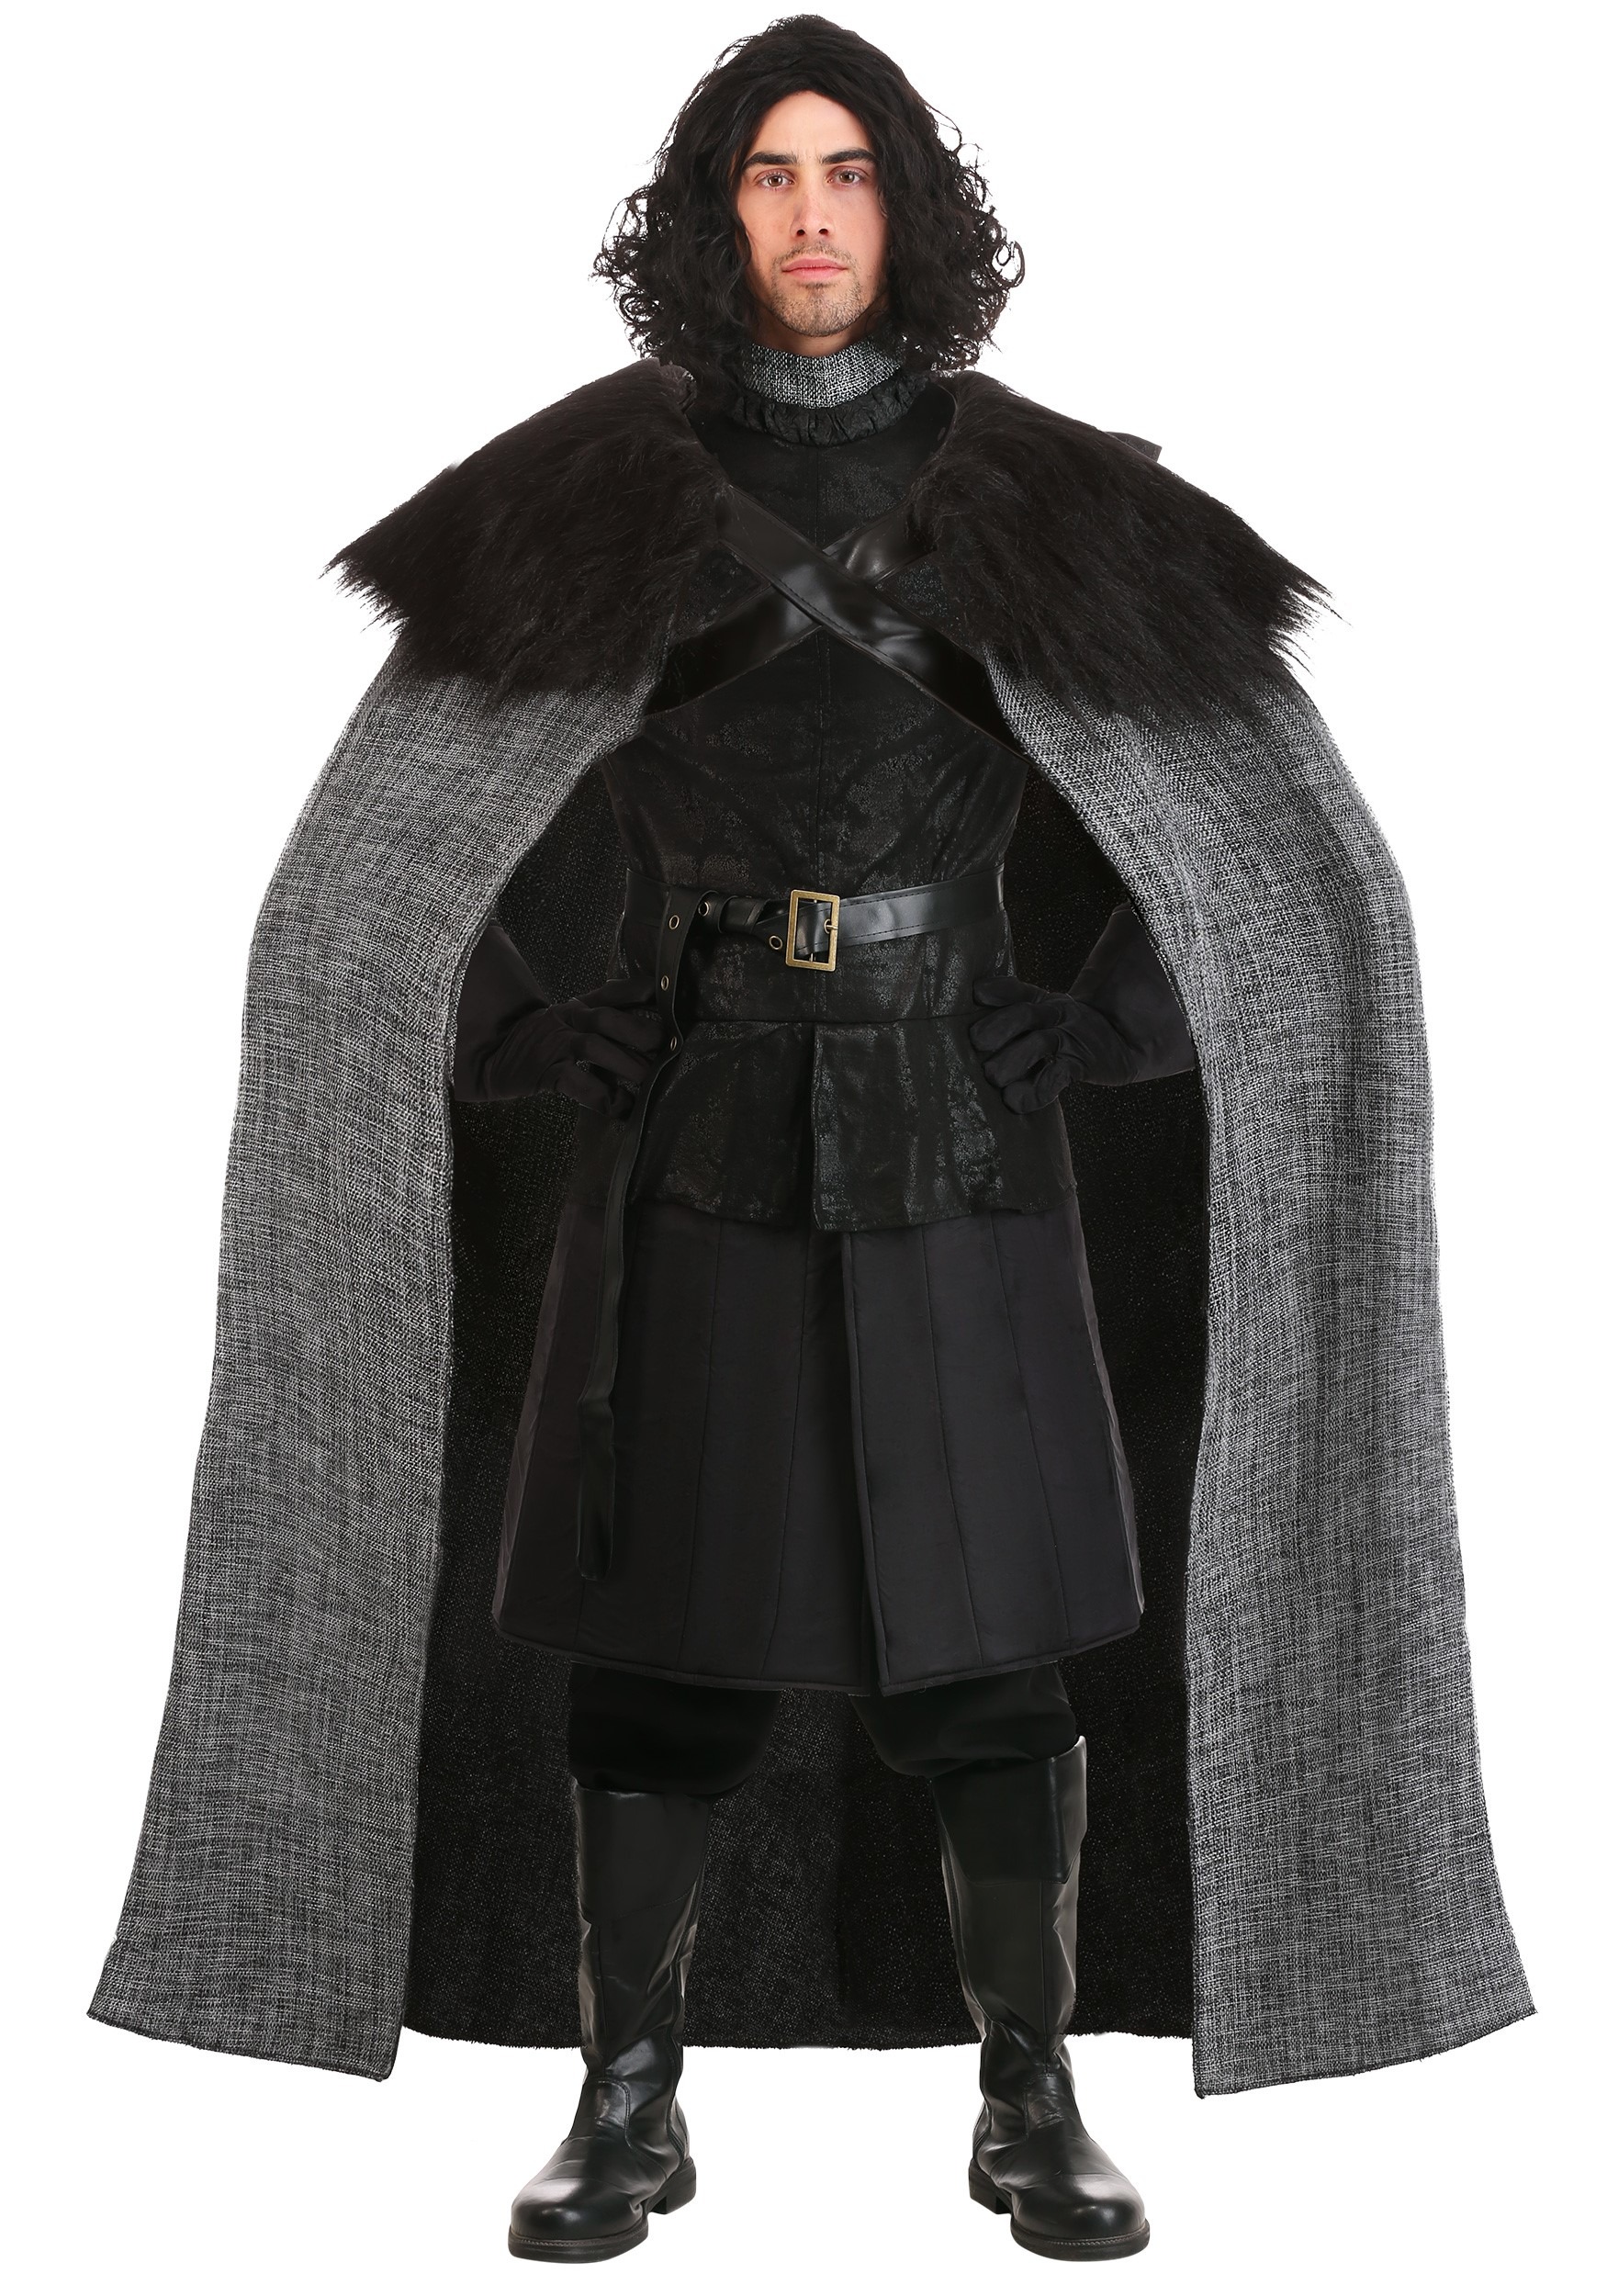 Dark Northern King Costume For Men